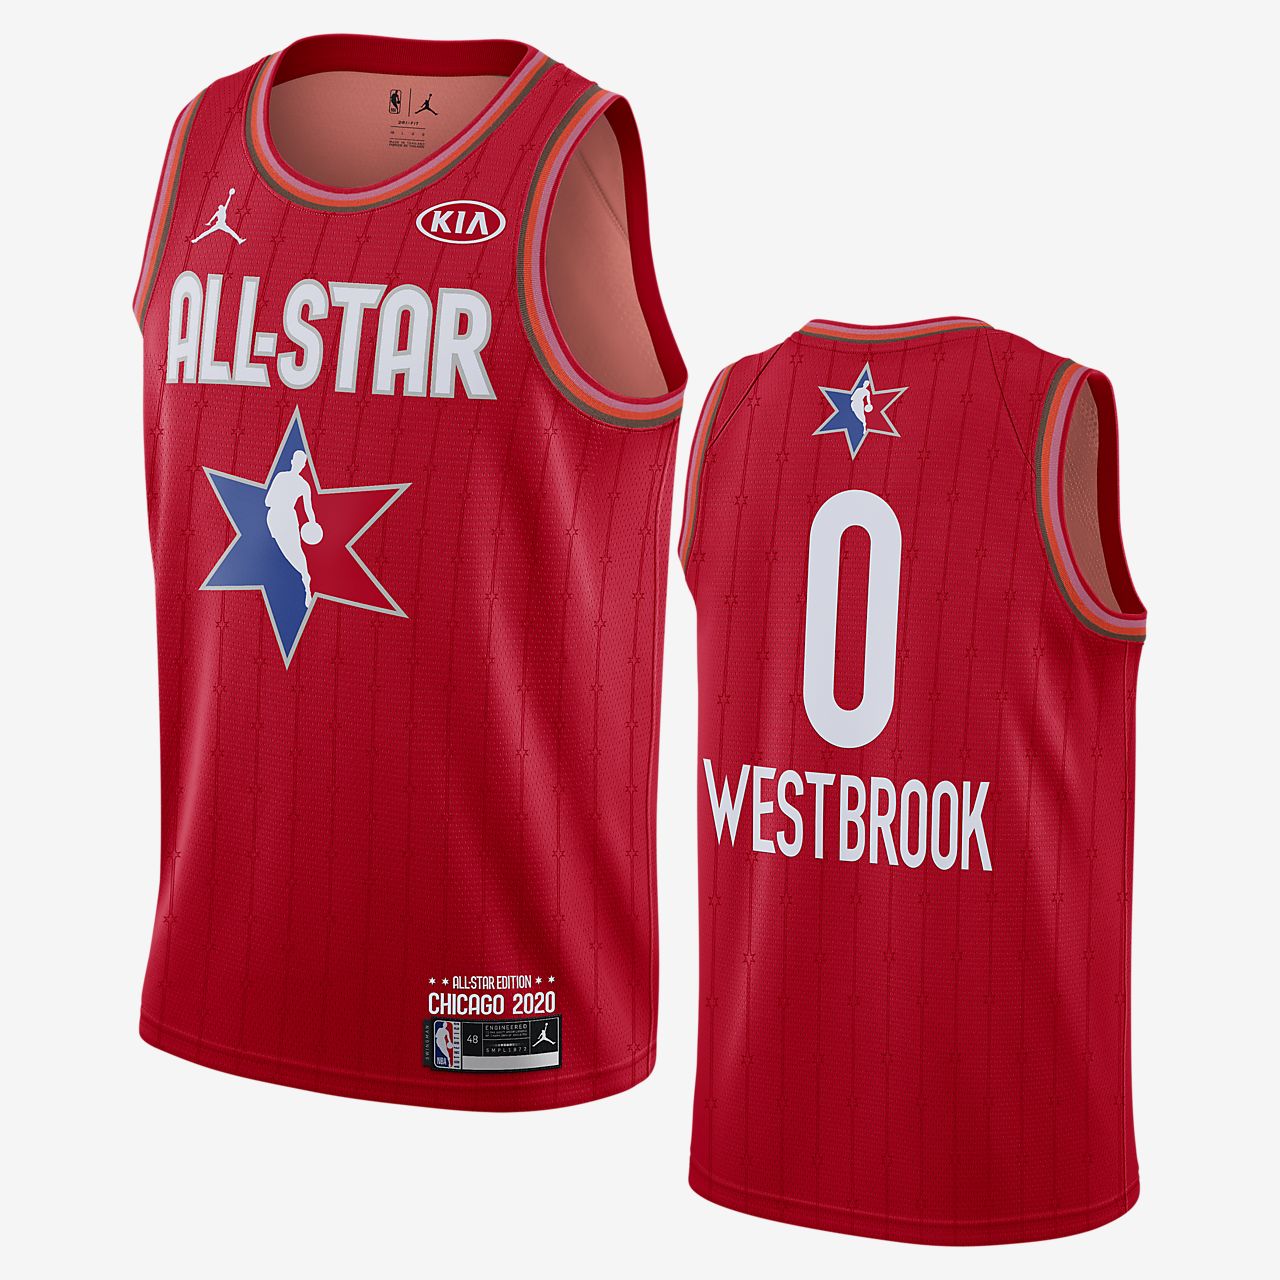 westbrook jersey australia